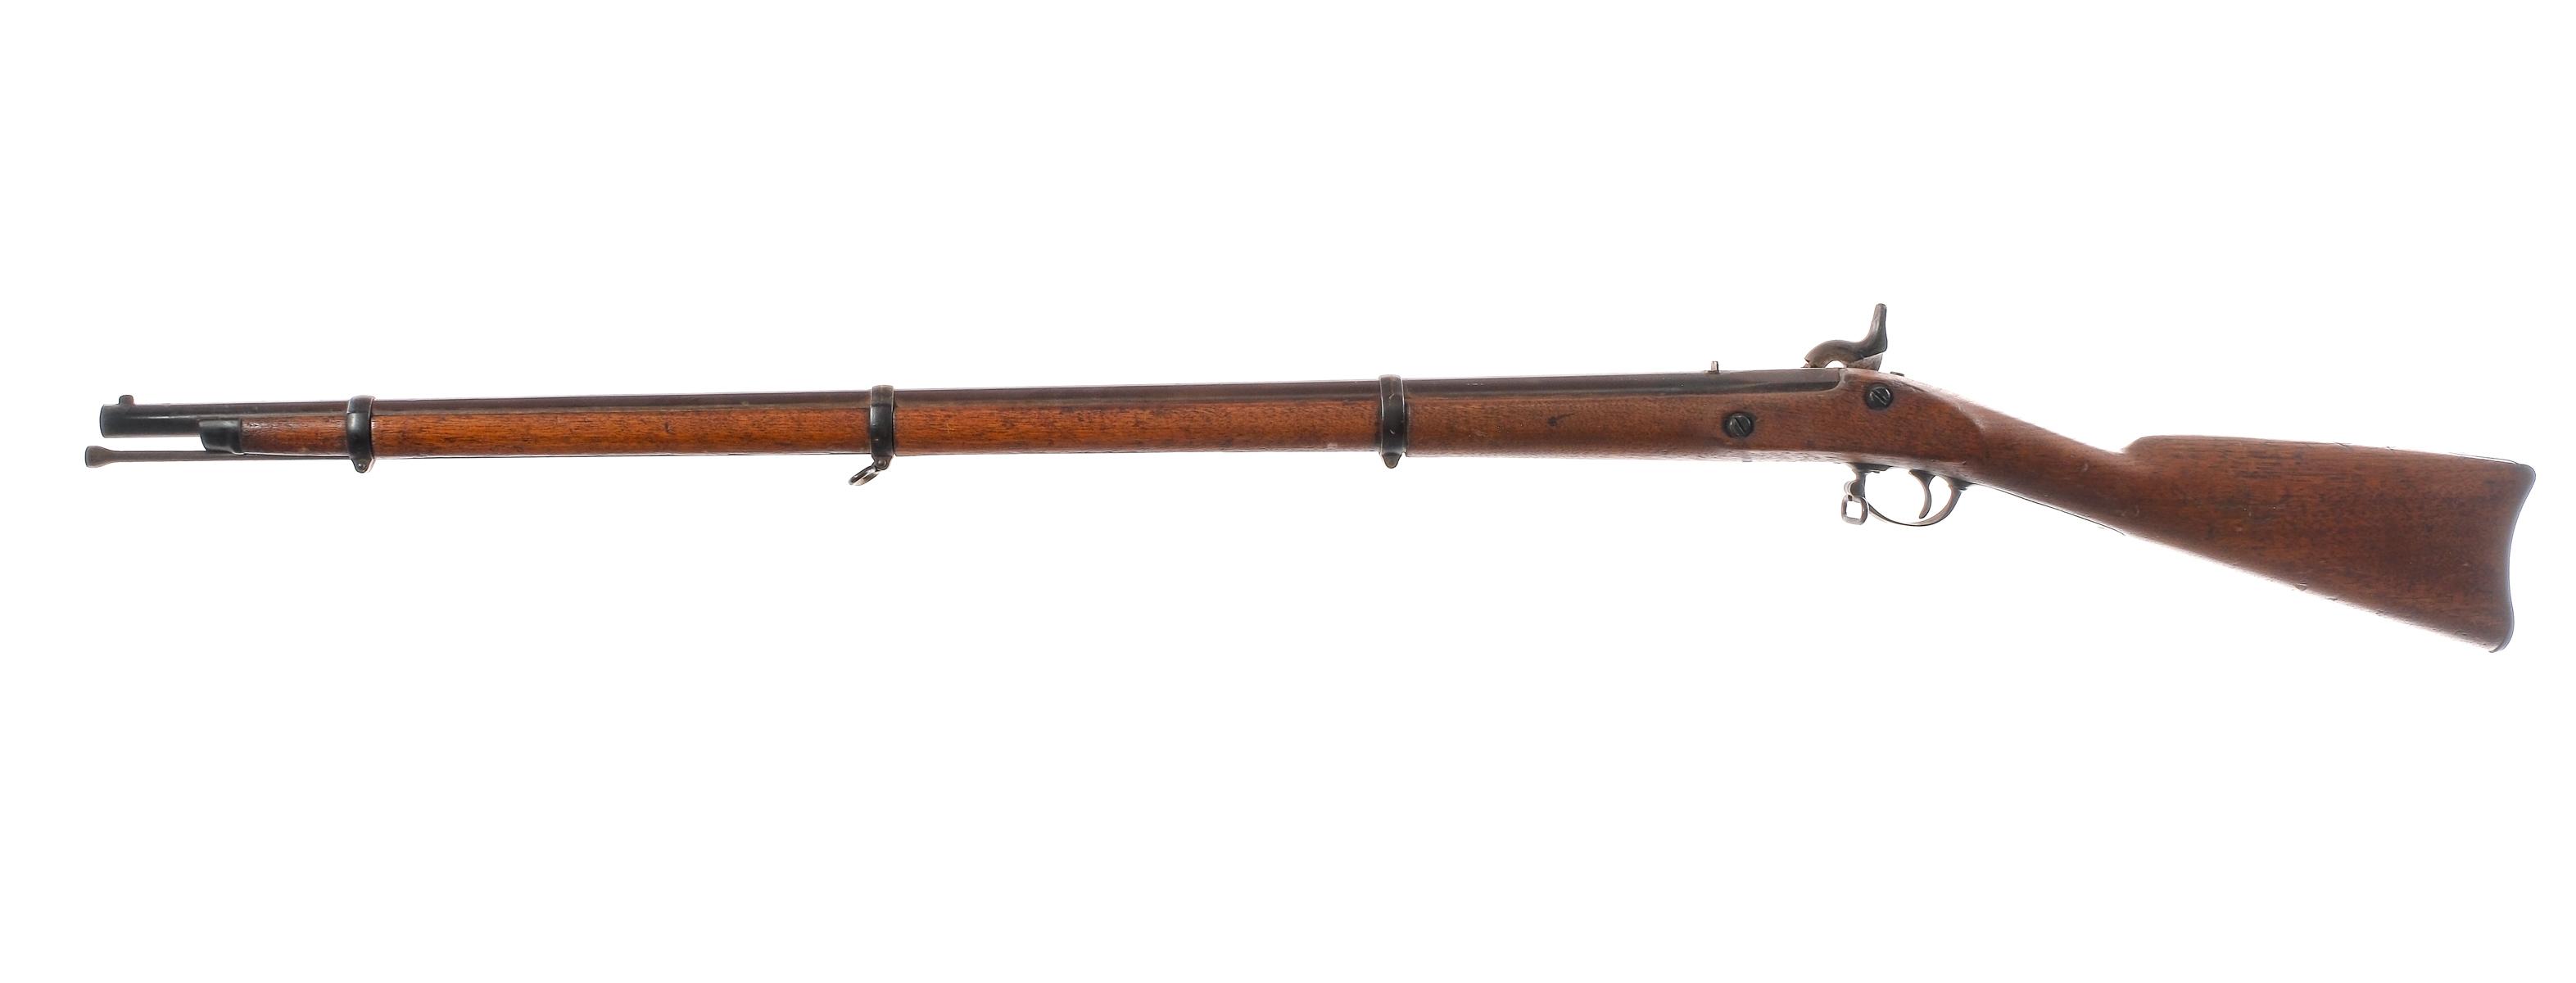 U.S. Springfield 1863 .58 BP Percussion Rifle